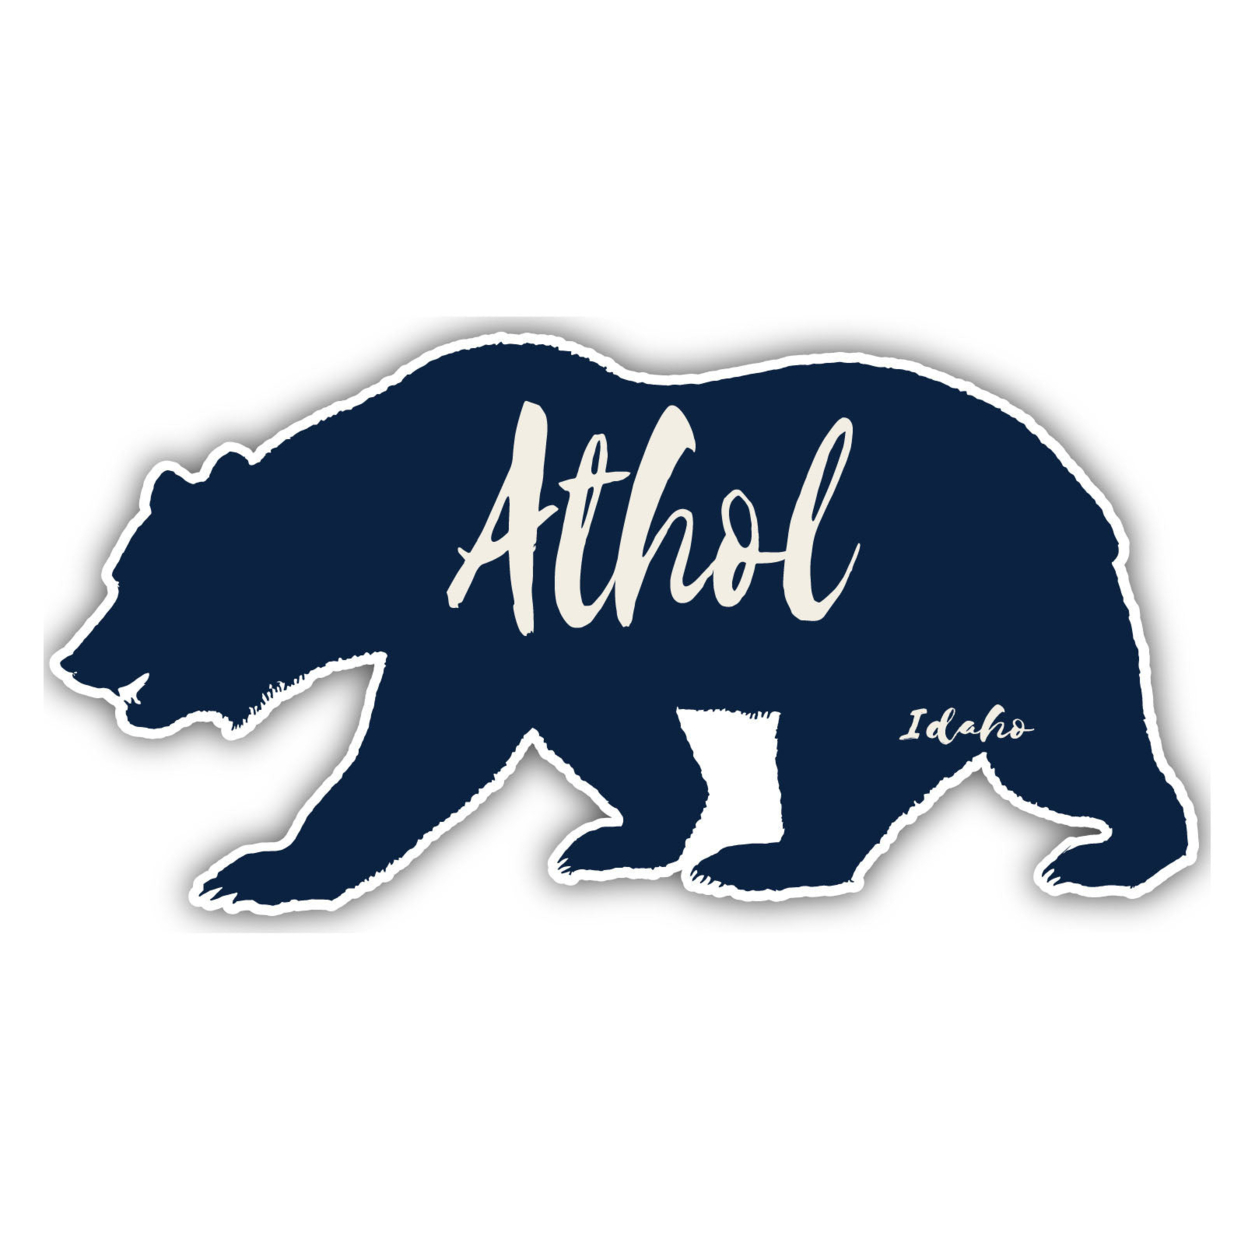 Athol Idaho Souvenir Decorative Stickers (Choose Theme And Size) - 4-Pack, 8-Inch, Bear